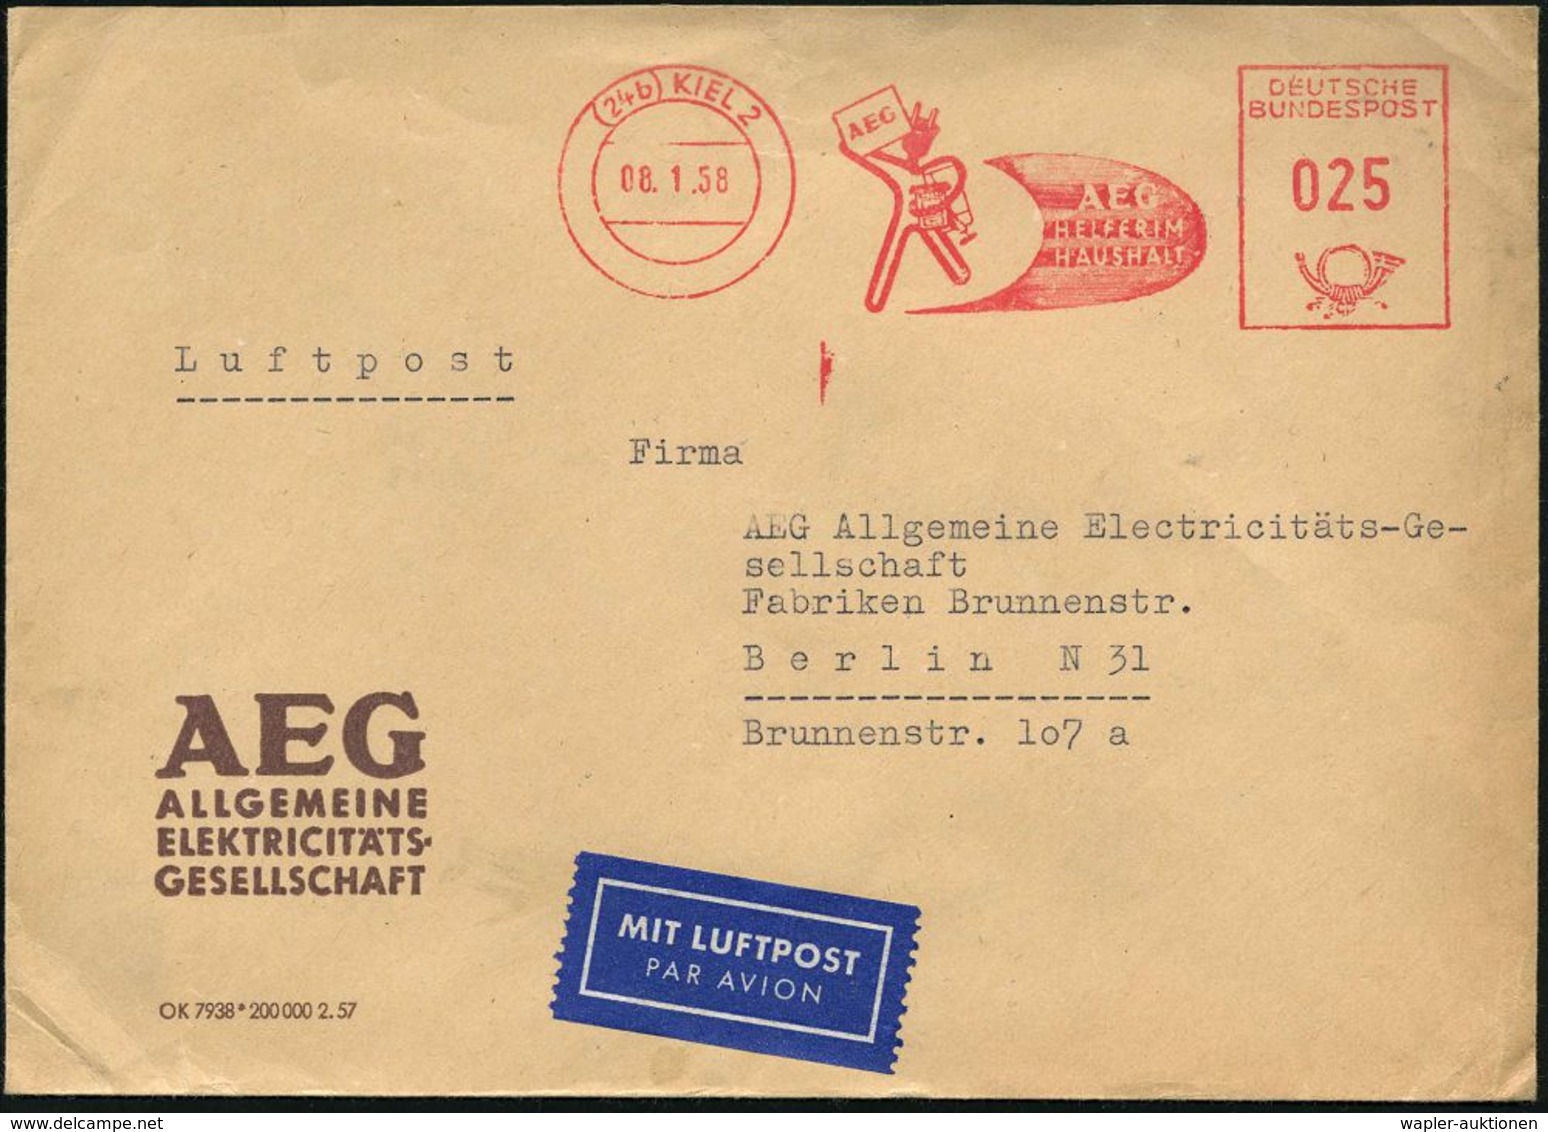 (24b) KIEL 2/ AEG/ HELFER IM/ HAUSHALT 1958 (8.1.) AFS 025 Pf. "Elektro-Teufel" Aus Elektrokabel (tansportiert Elektrohe - Electricidad